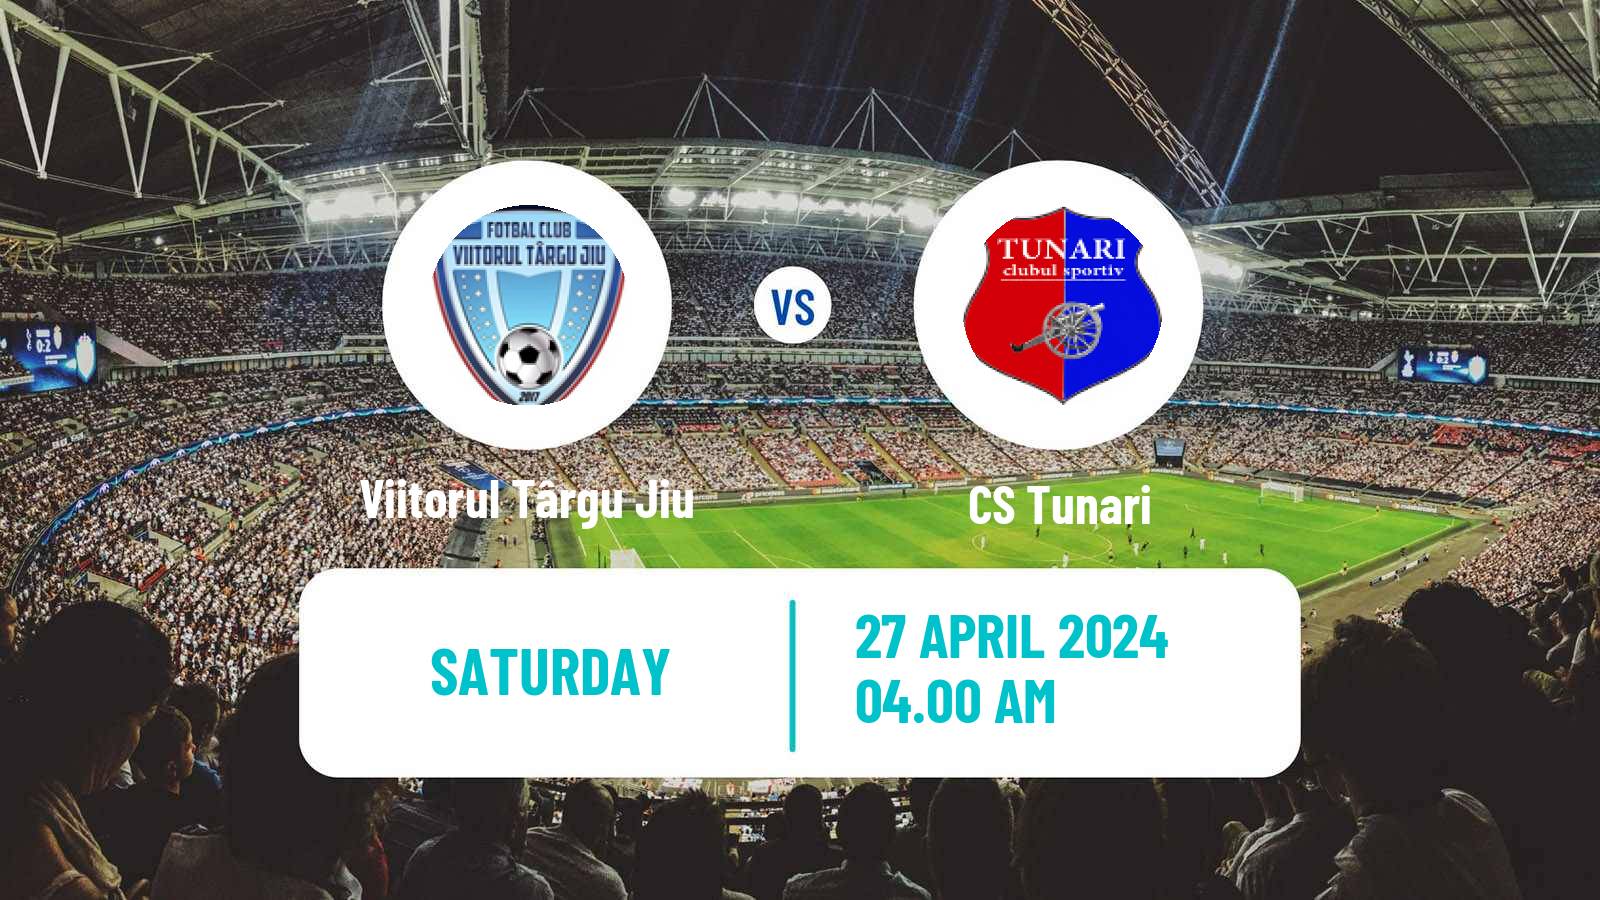 Soccer Romanian Division 2 Viitorul Târgu Jiu - Tunari